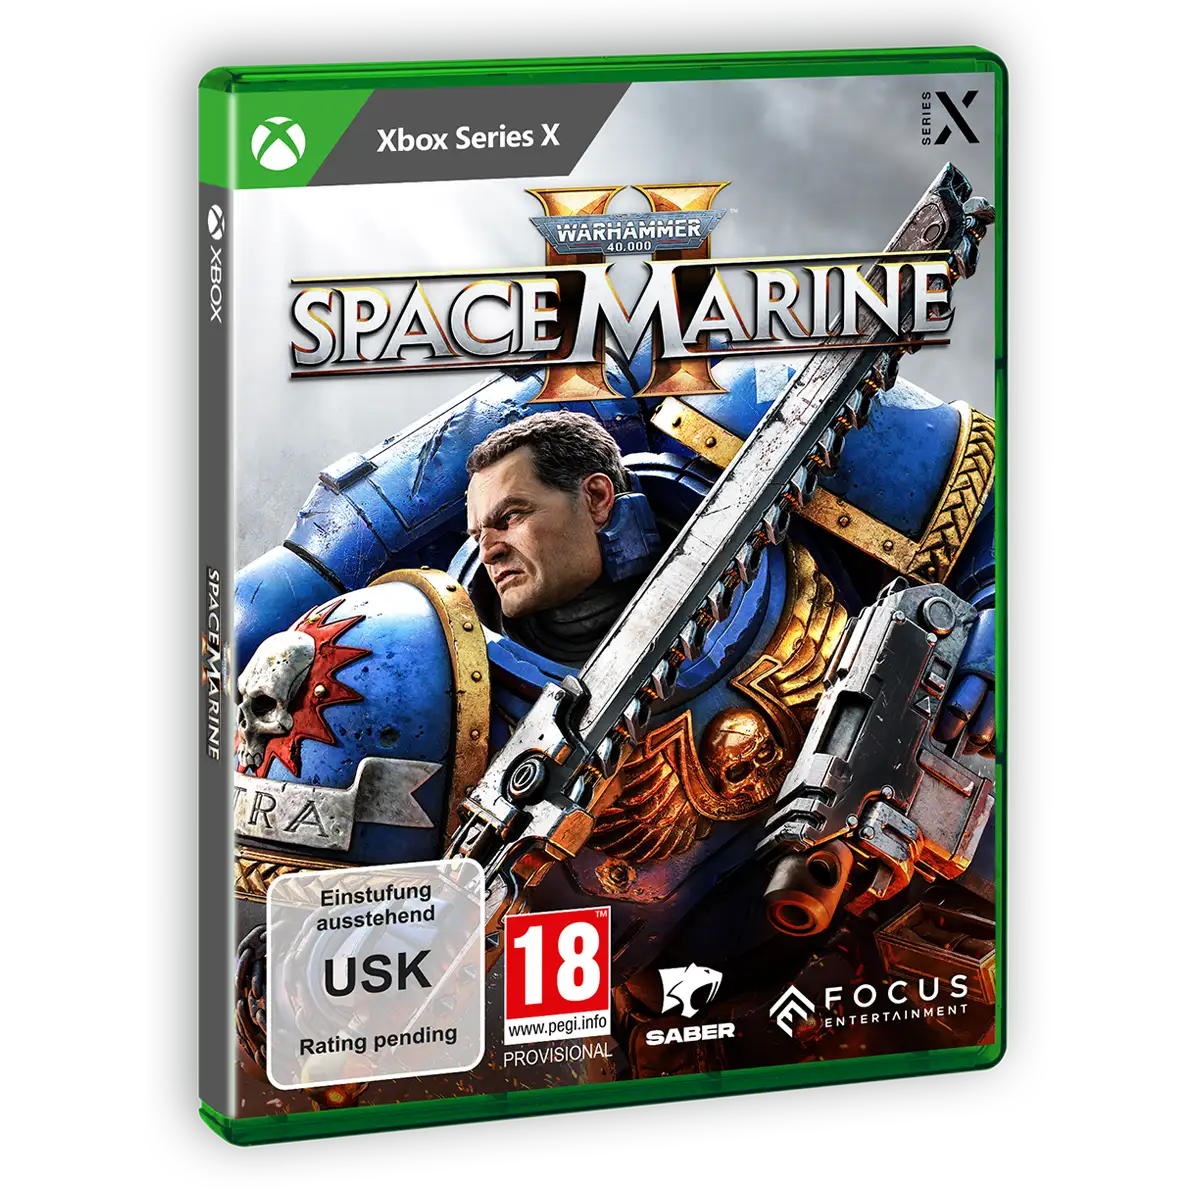 Warhammer 40,000: Space Marine 2 (XSRX) Image 2